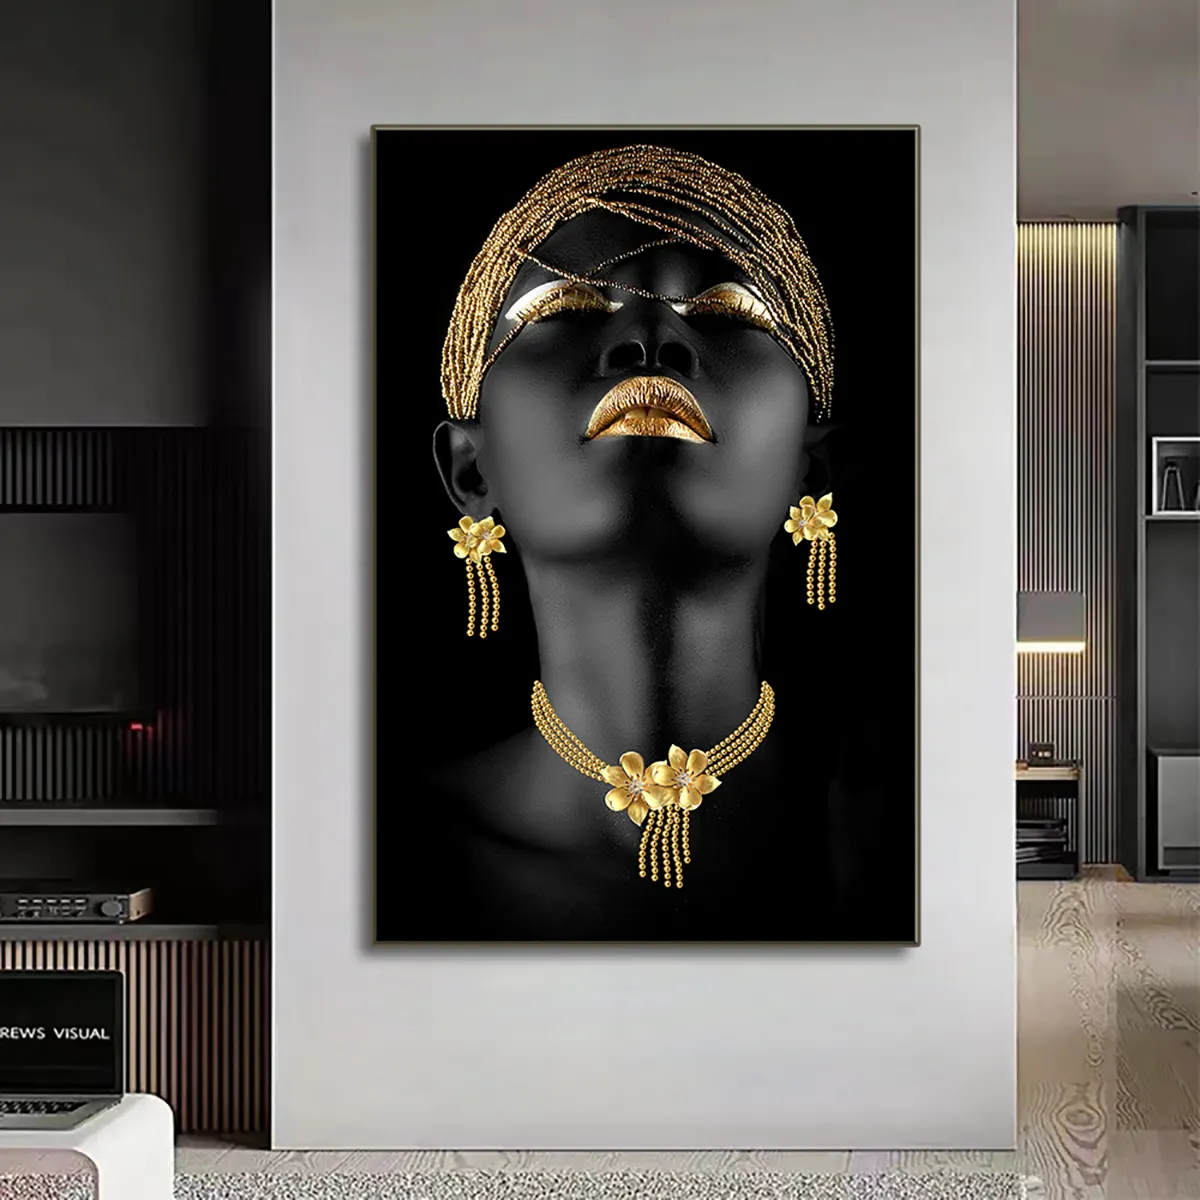 Pósteres modernos de oro negro, impresiones de belleza, lienzo de mujer afroamericana, pintura de arte de pared, imágenes de chicas negras